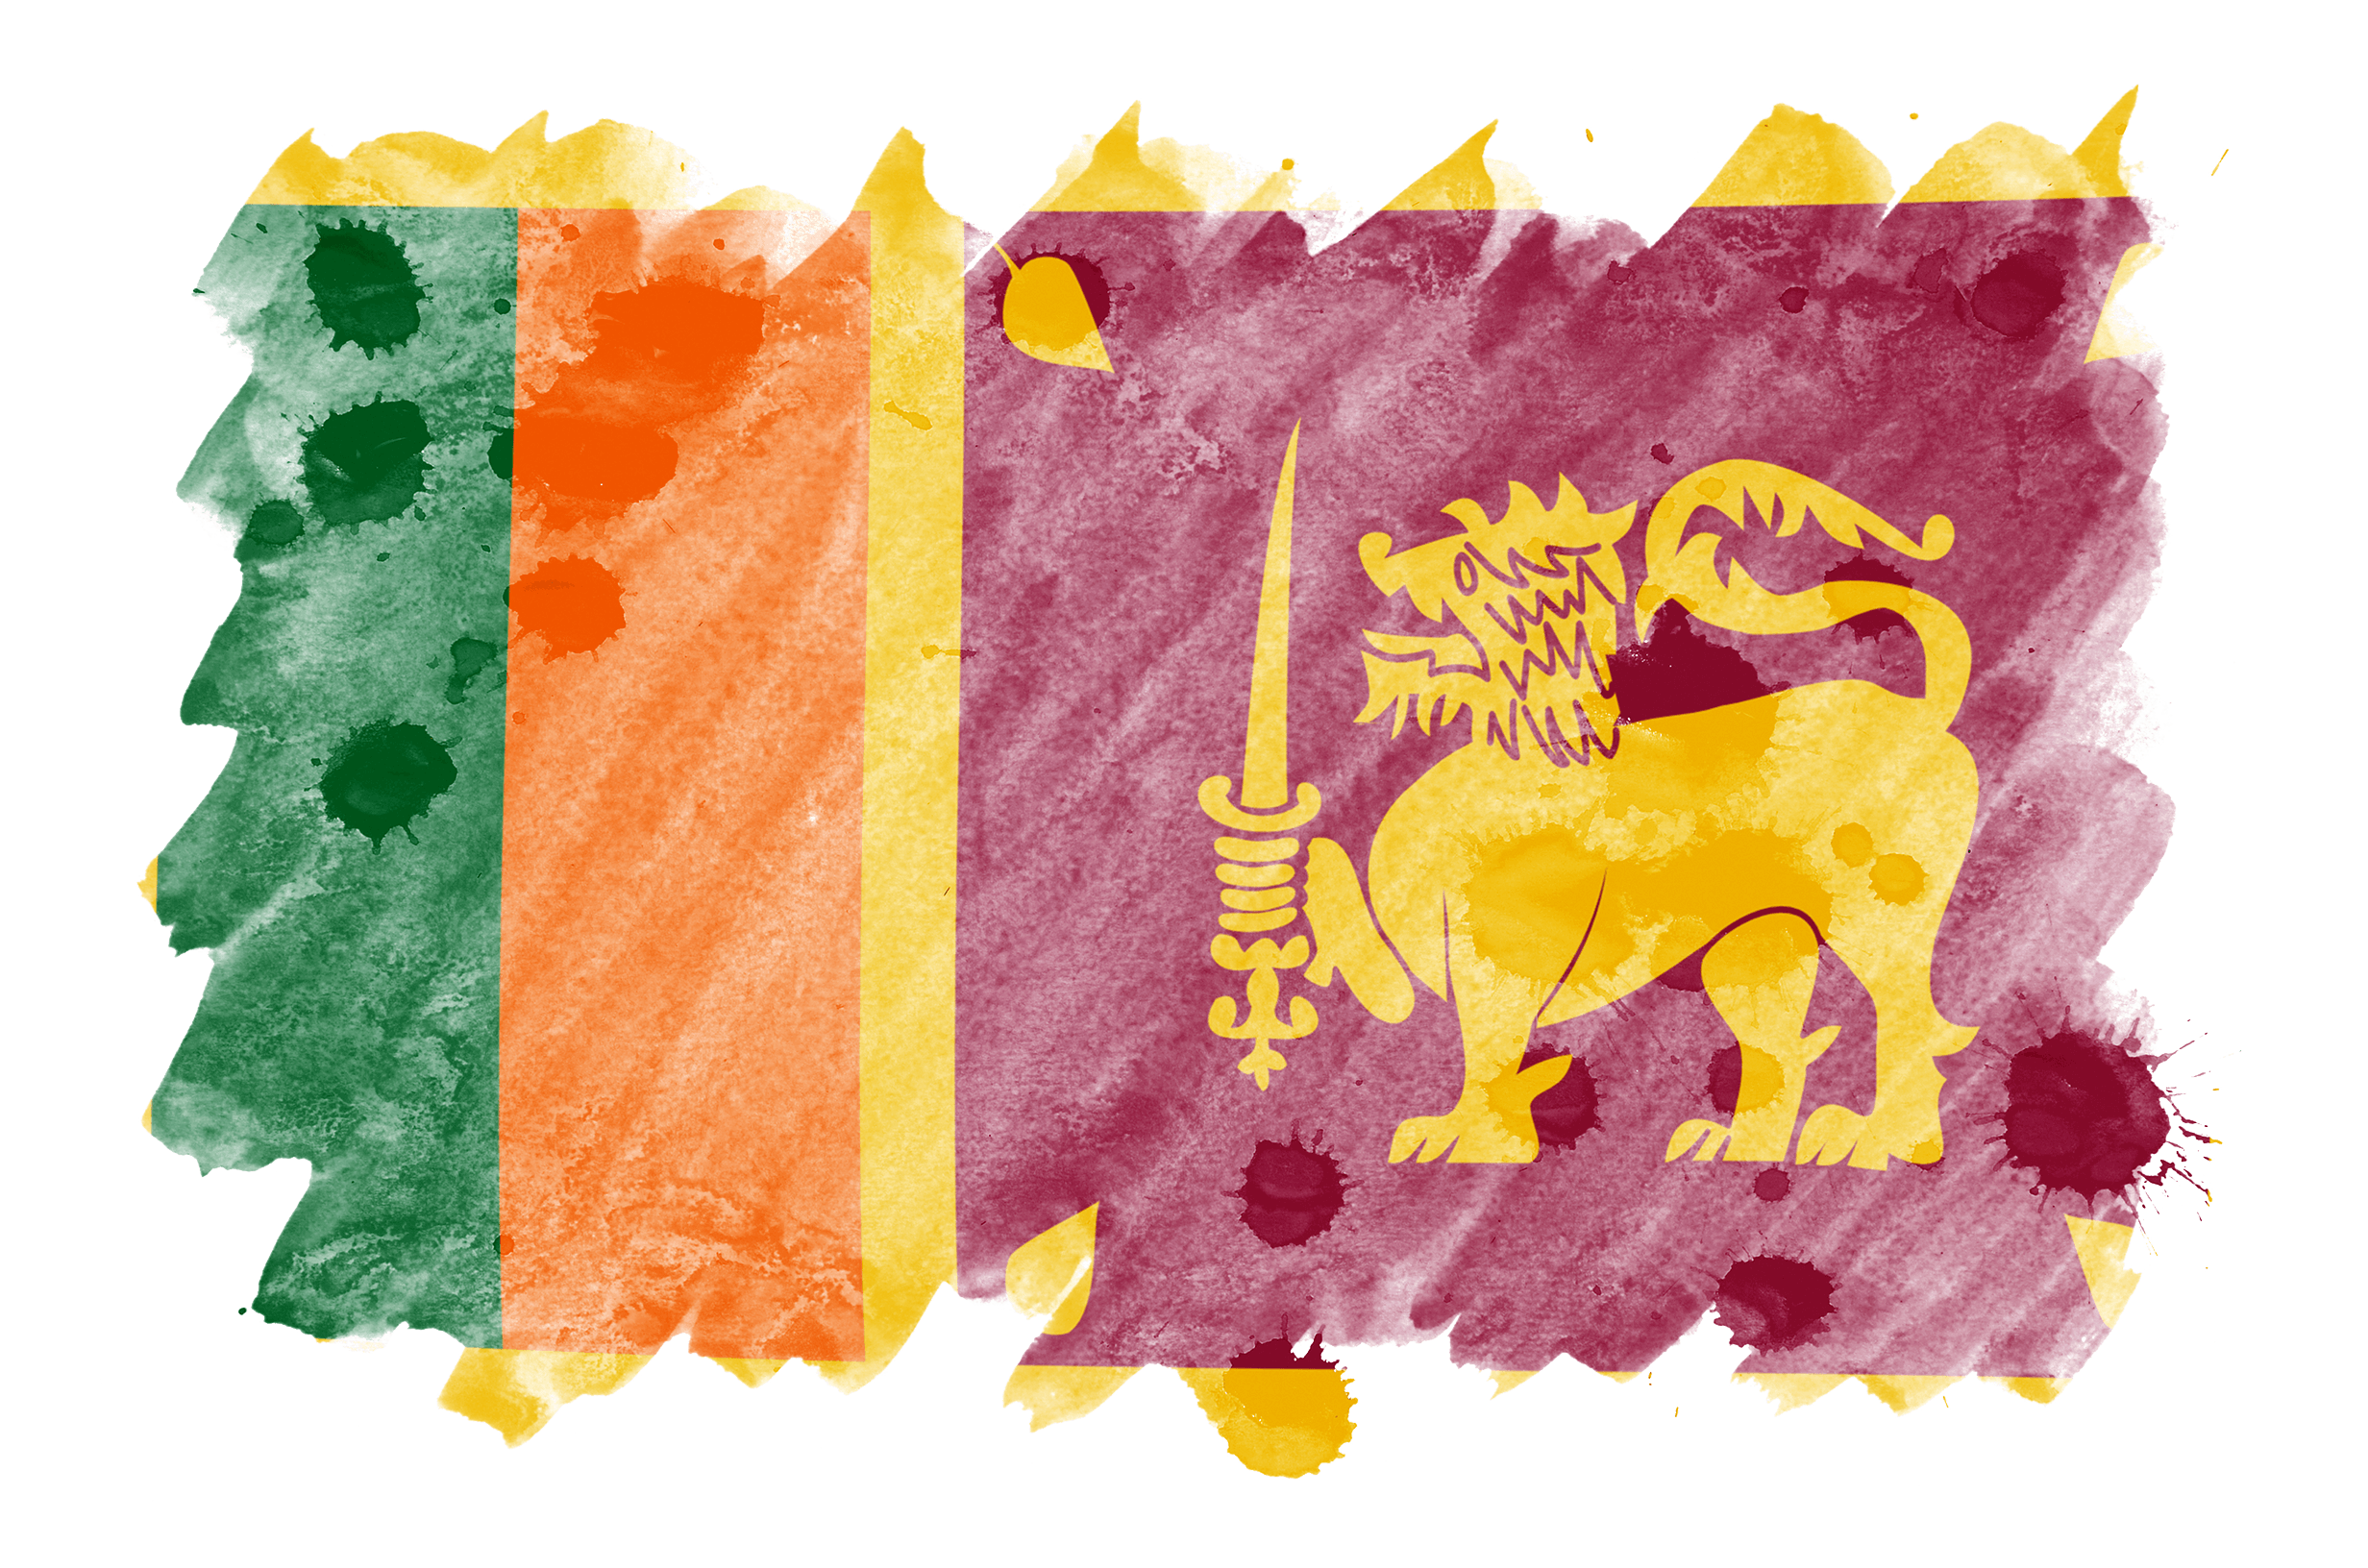 Sri Lankan flag depicted in liquid watercolor style.